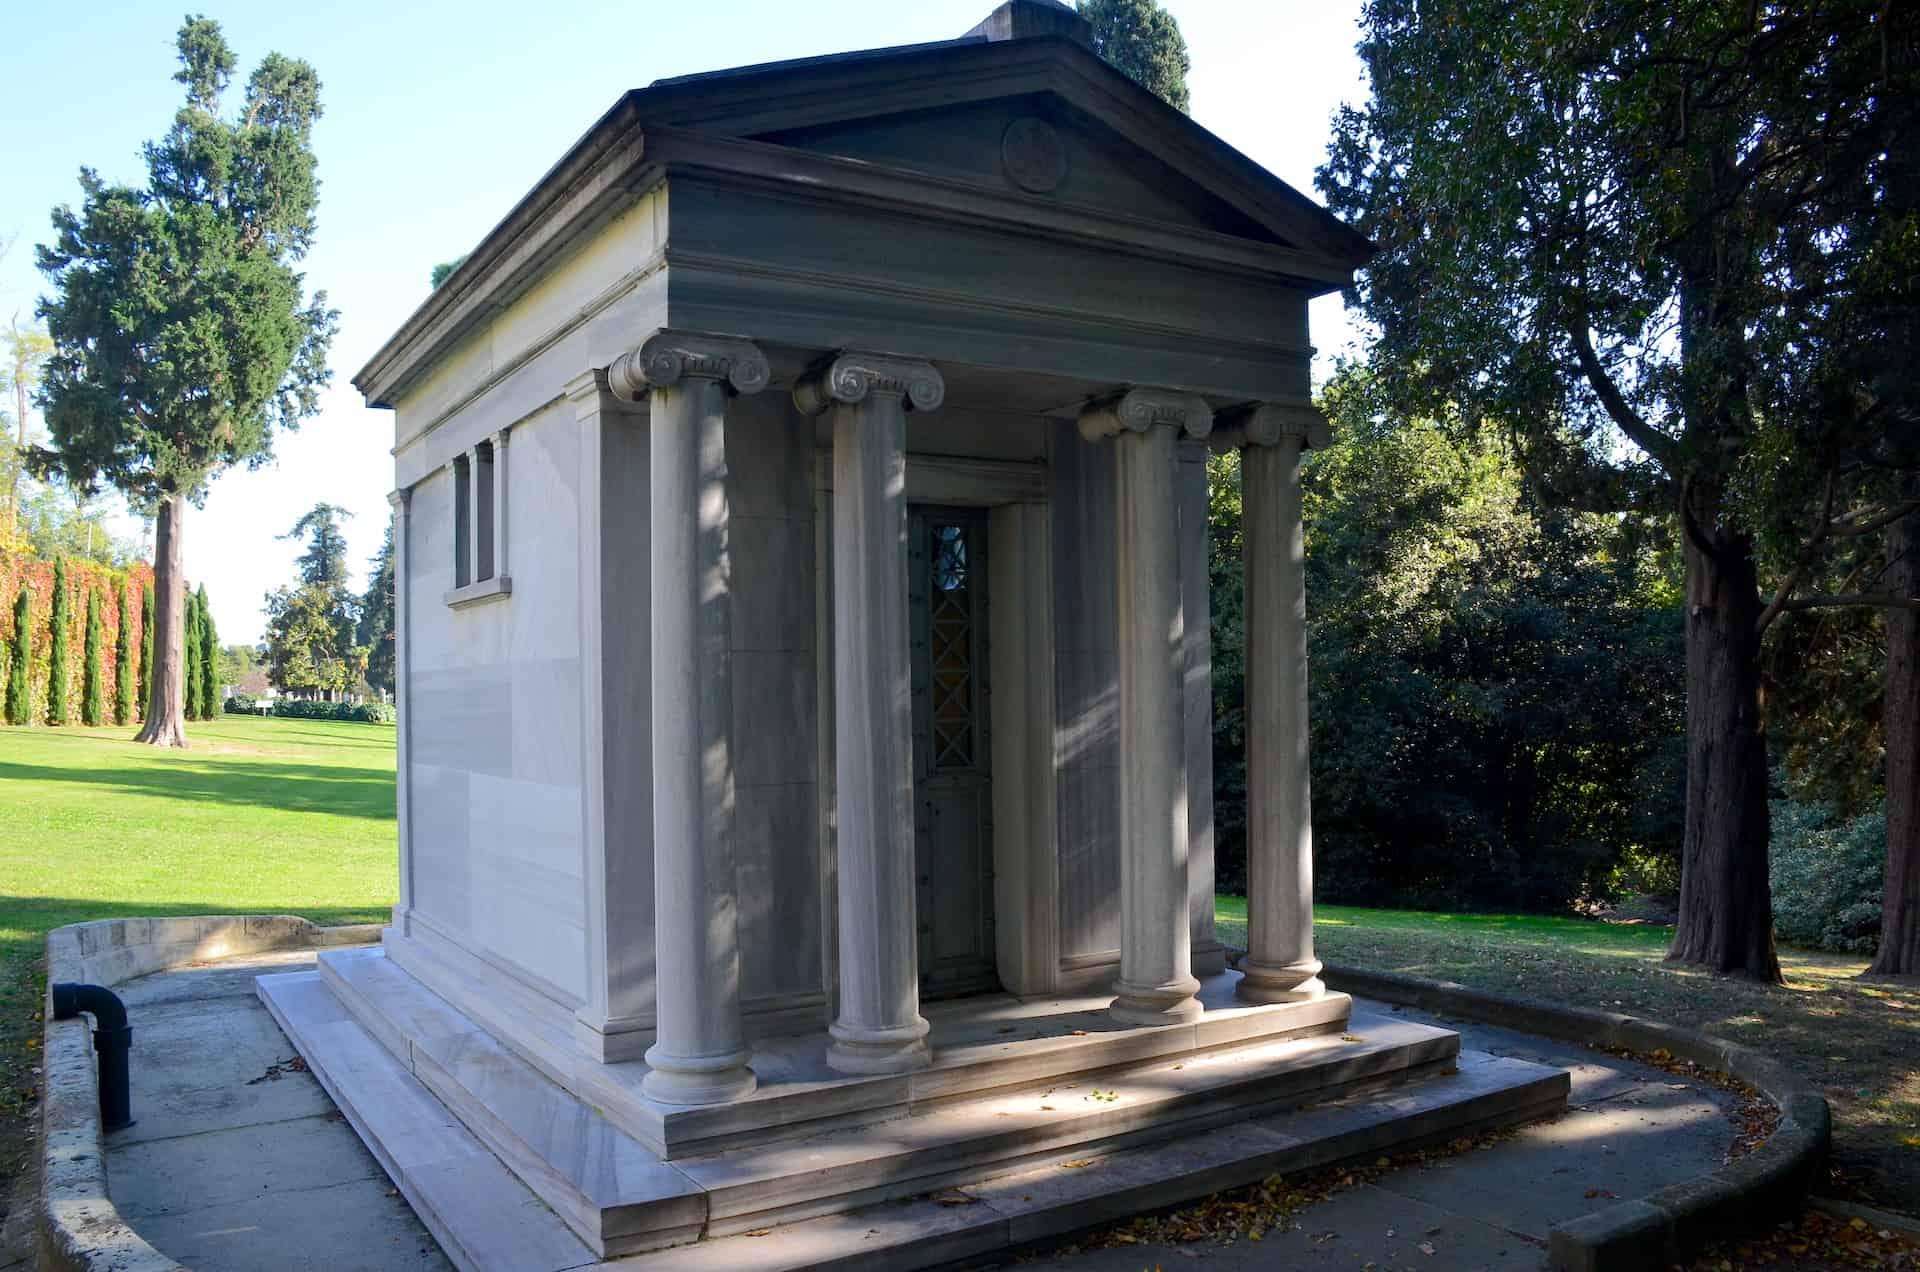 Chapel dedicated to Sir Nicholas O'Conor at the Haidar Pasha Cemetery in Istanbul, Turkey